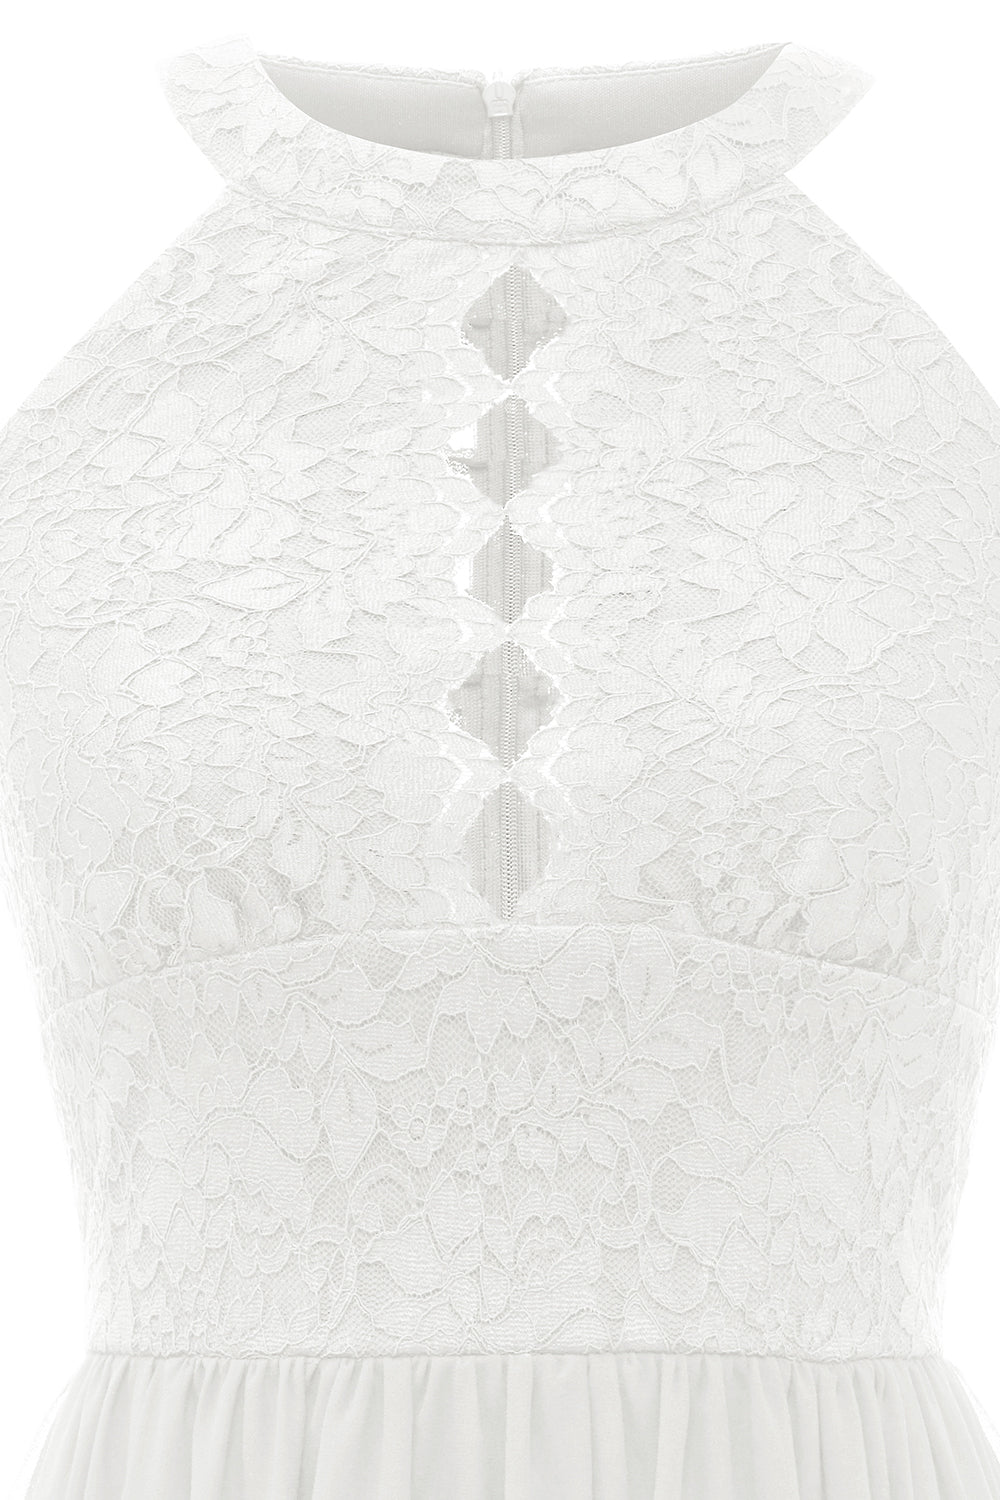 A Line Halter Neck White Lace Dress